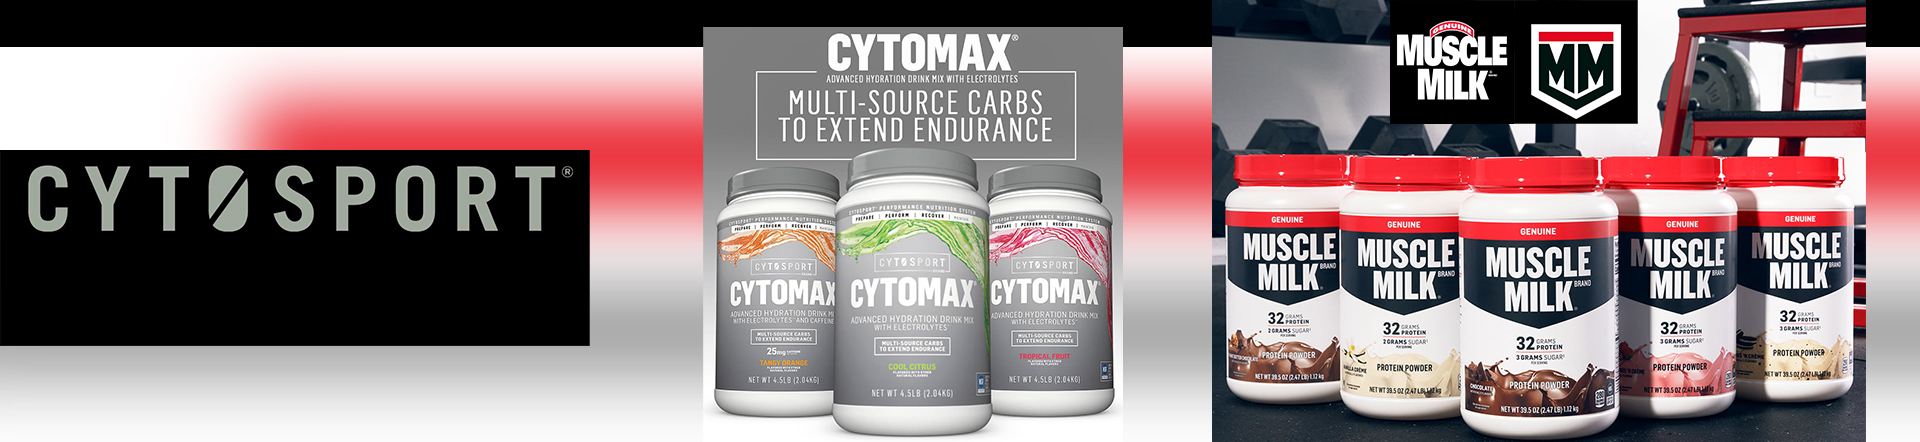 CytoSport CytoMax Muscle Milk Protein